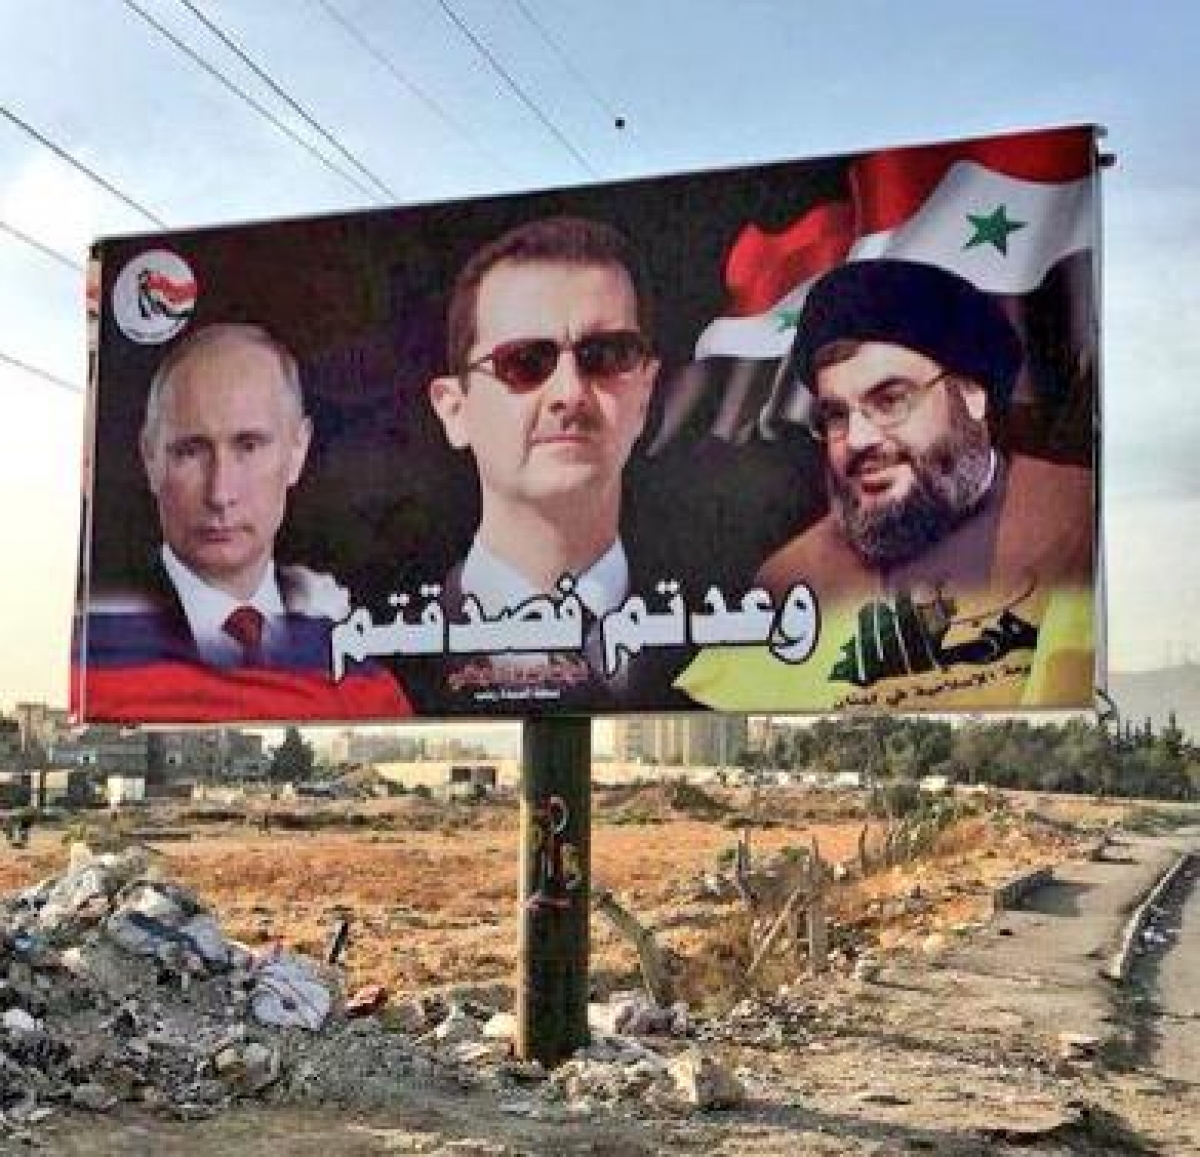 Plakat in Syrien